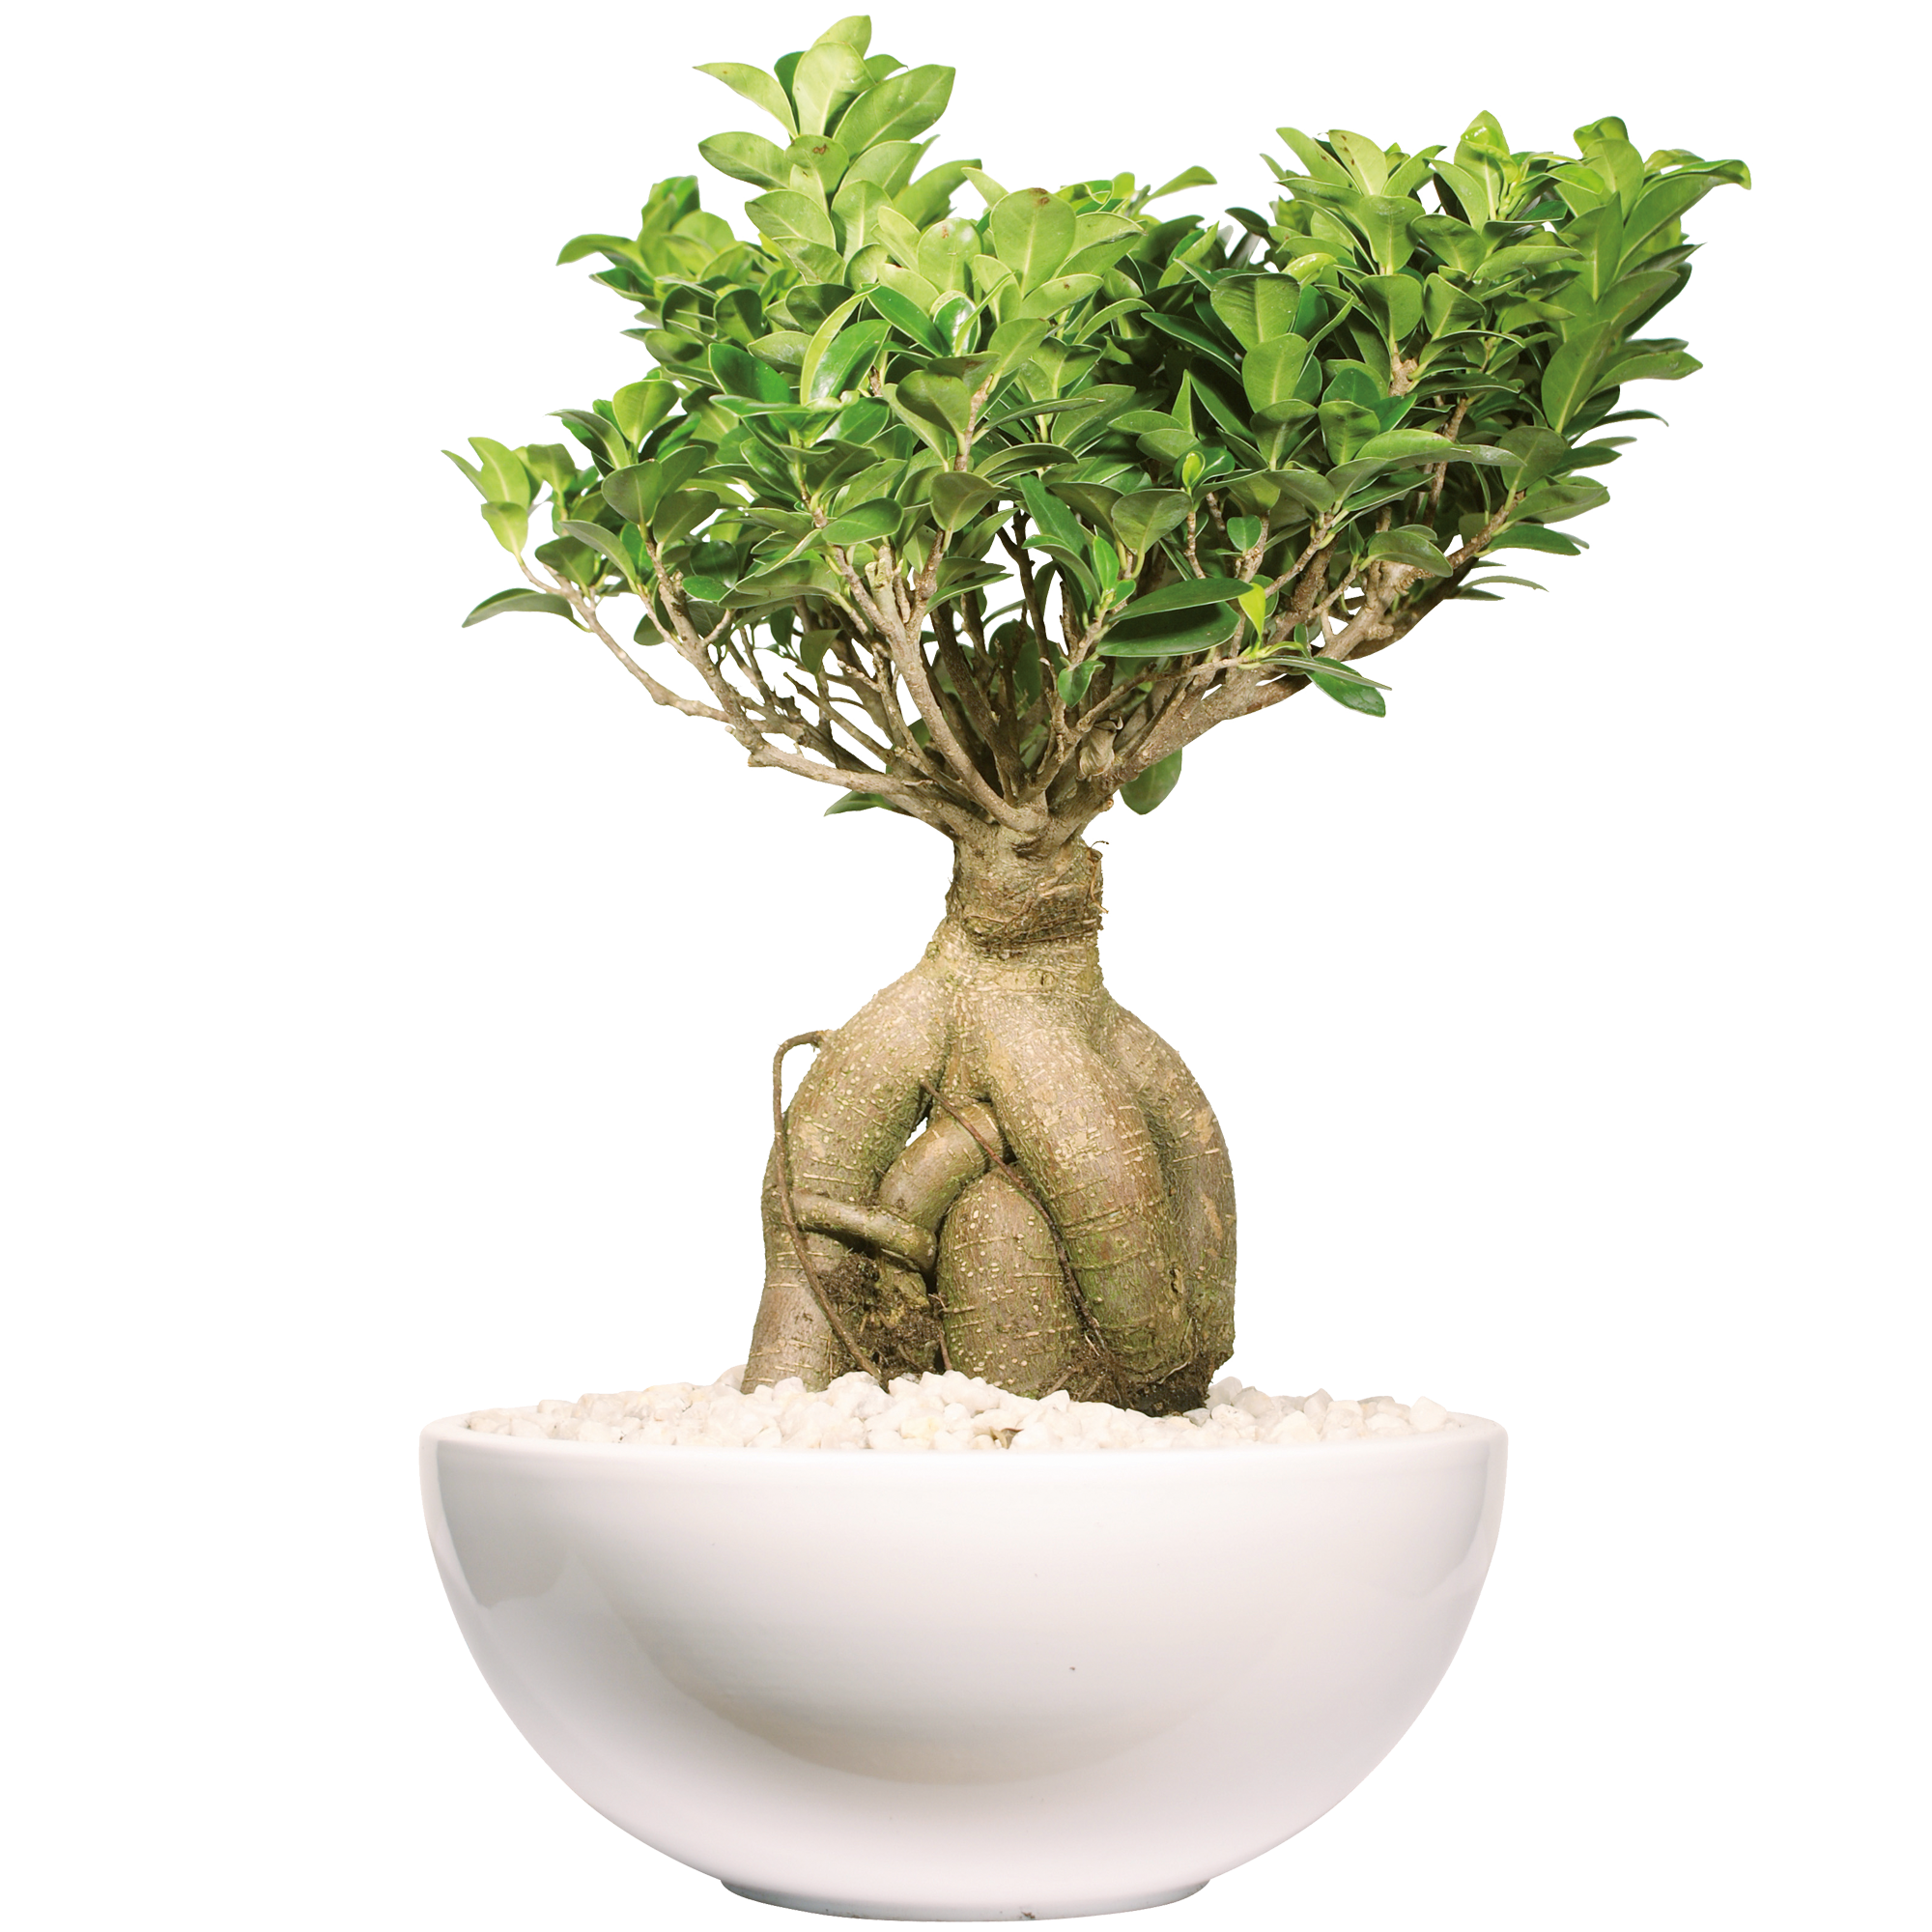 Zimmerbonsai Ficus 'Ginseng' in Schale Salsa weiß 30 cm + product picture